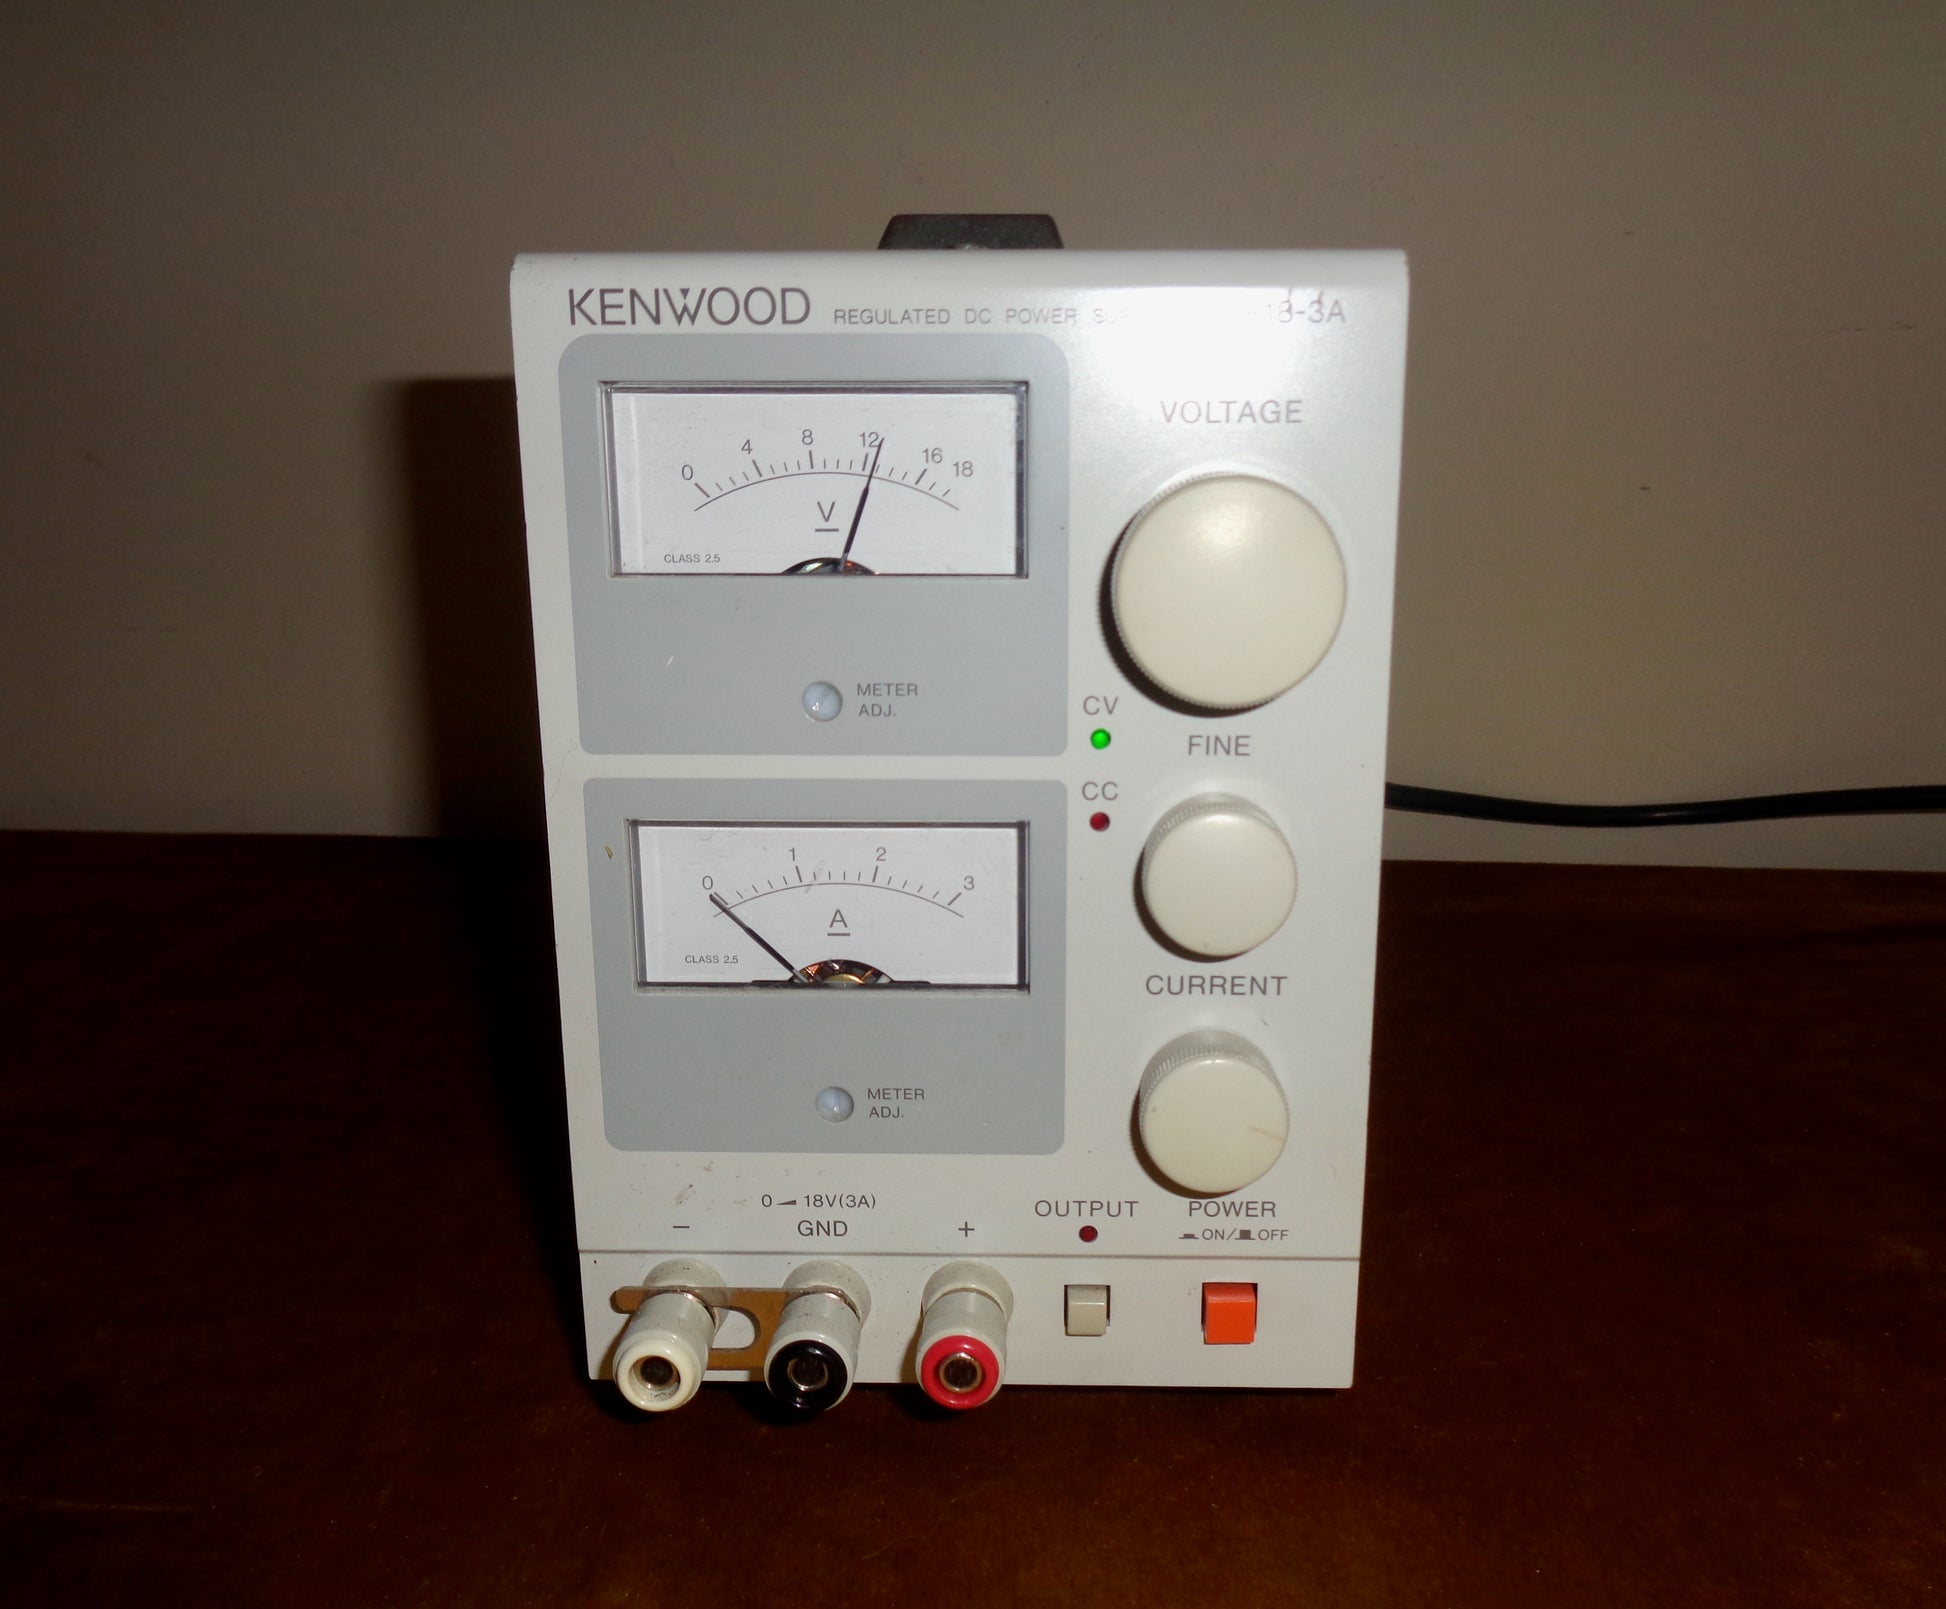 Kenwood PR18-3A Regulated DC Power Supply